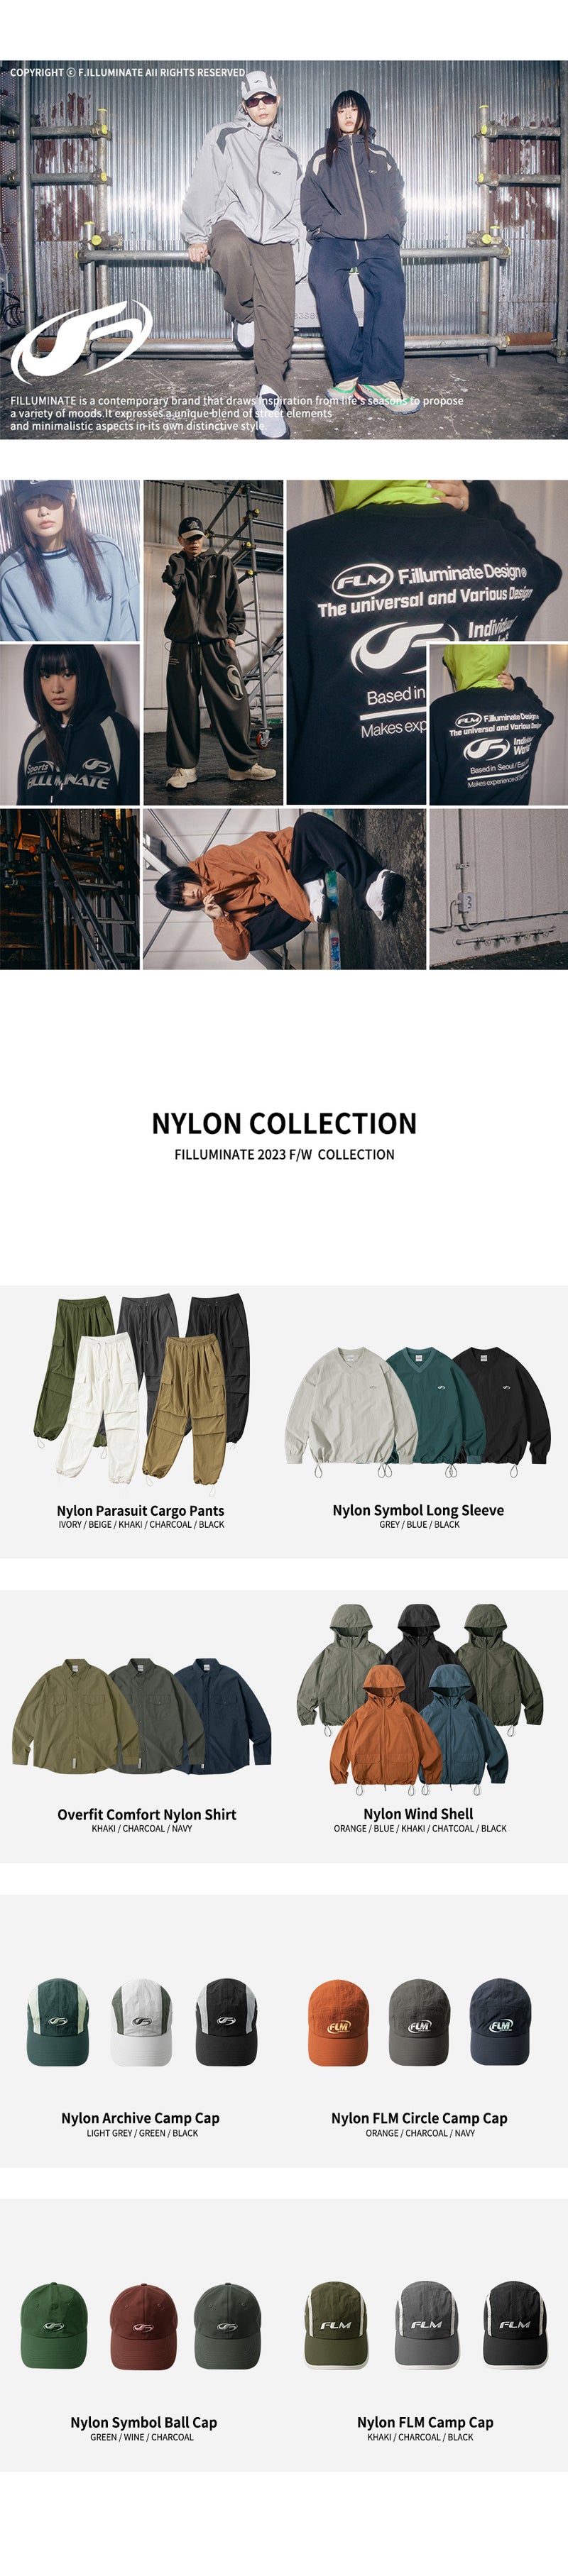 Nylon Parasuit Cargo Pants-Charcoal